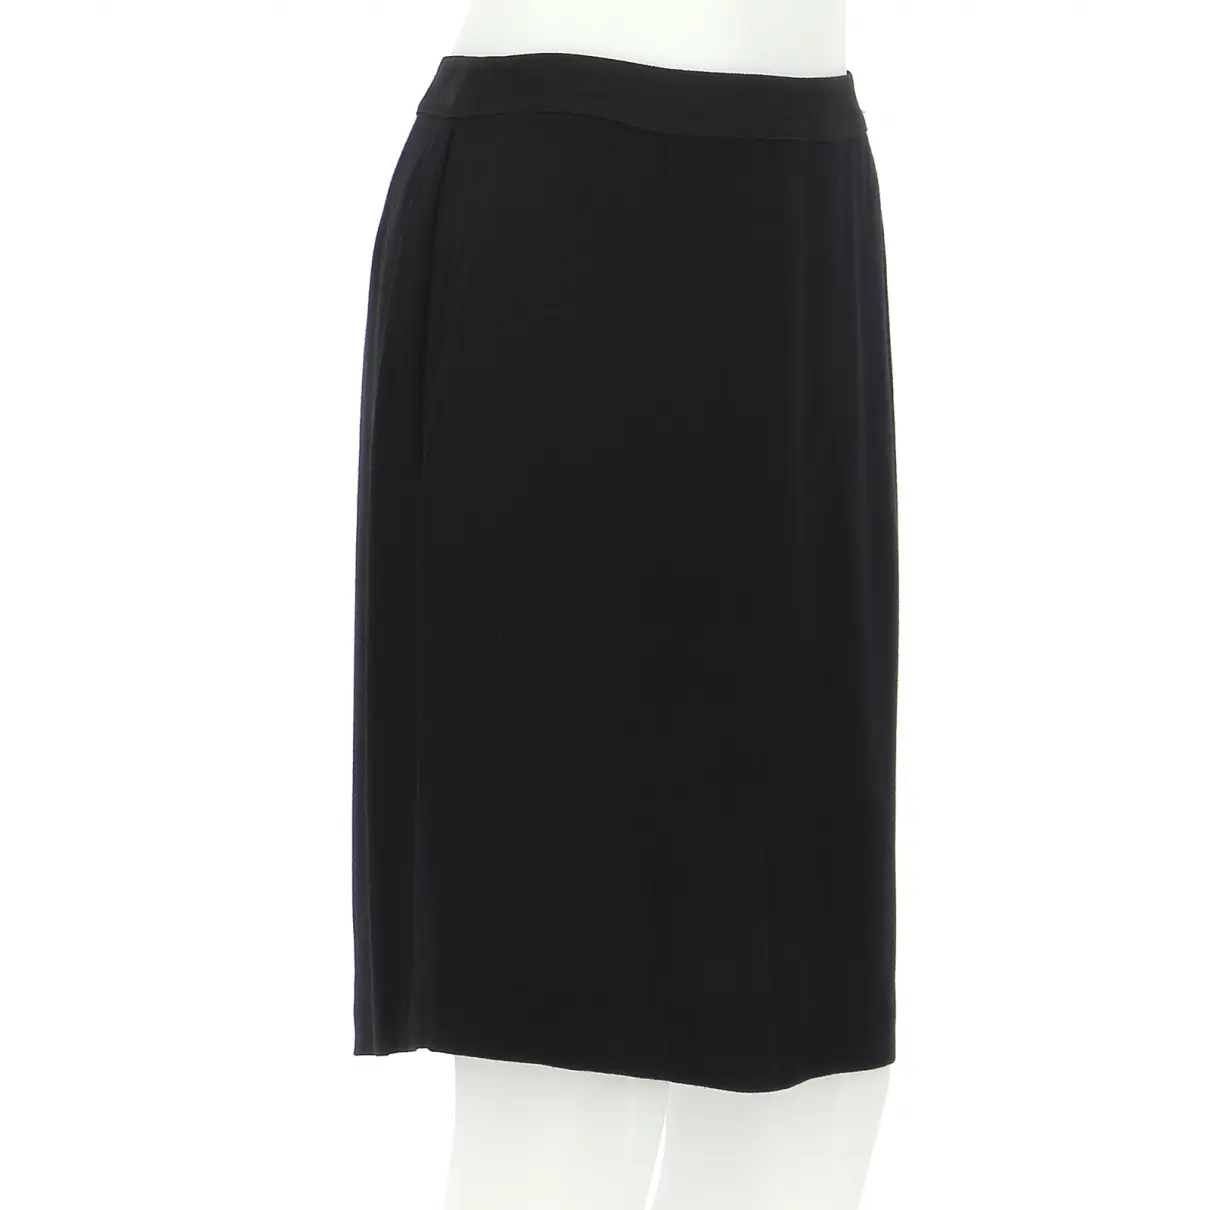 Buy ba&sh x Vestiaire Collective Mini skirt online